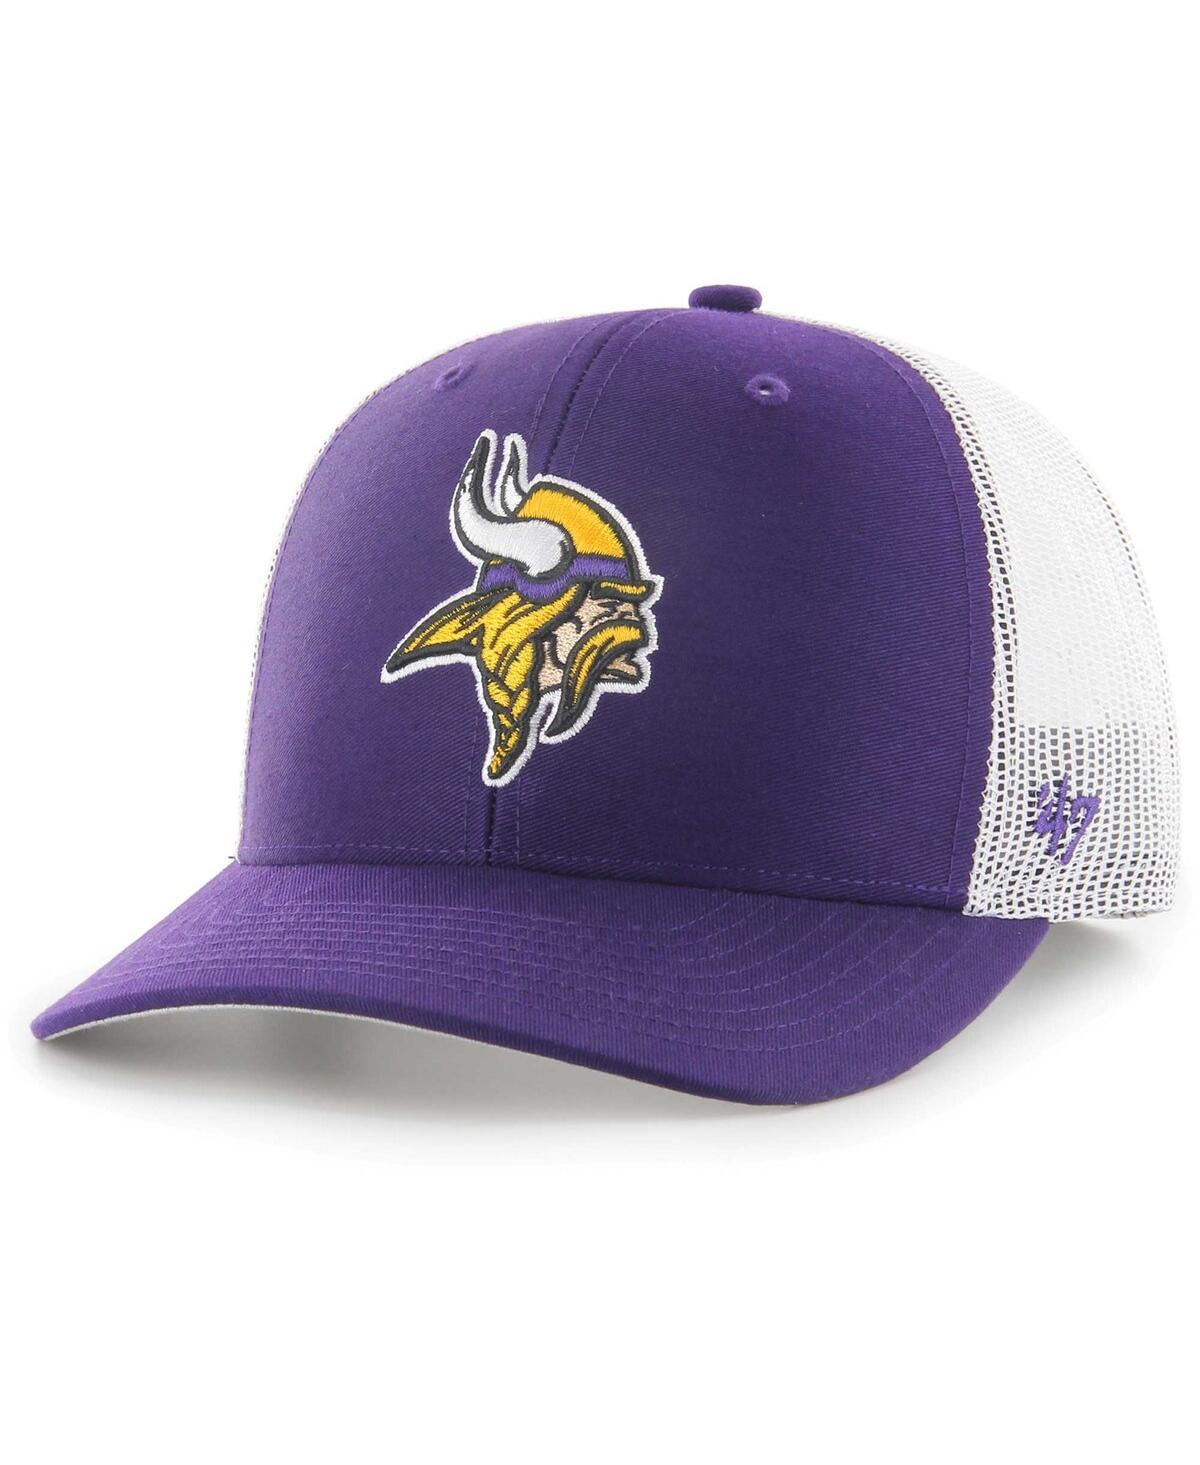 47 Brand Men's Purple, White Minnesota Vikings Trucker Snapback Hat